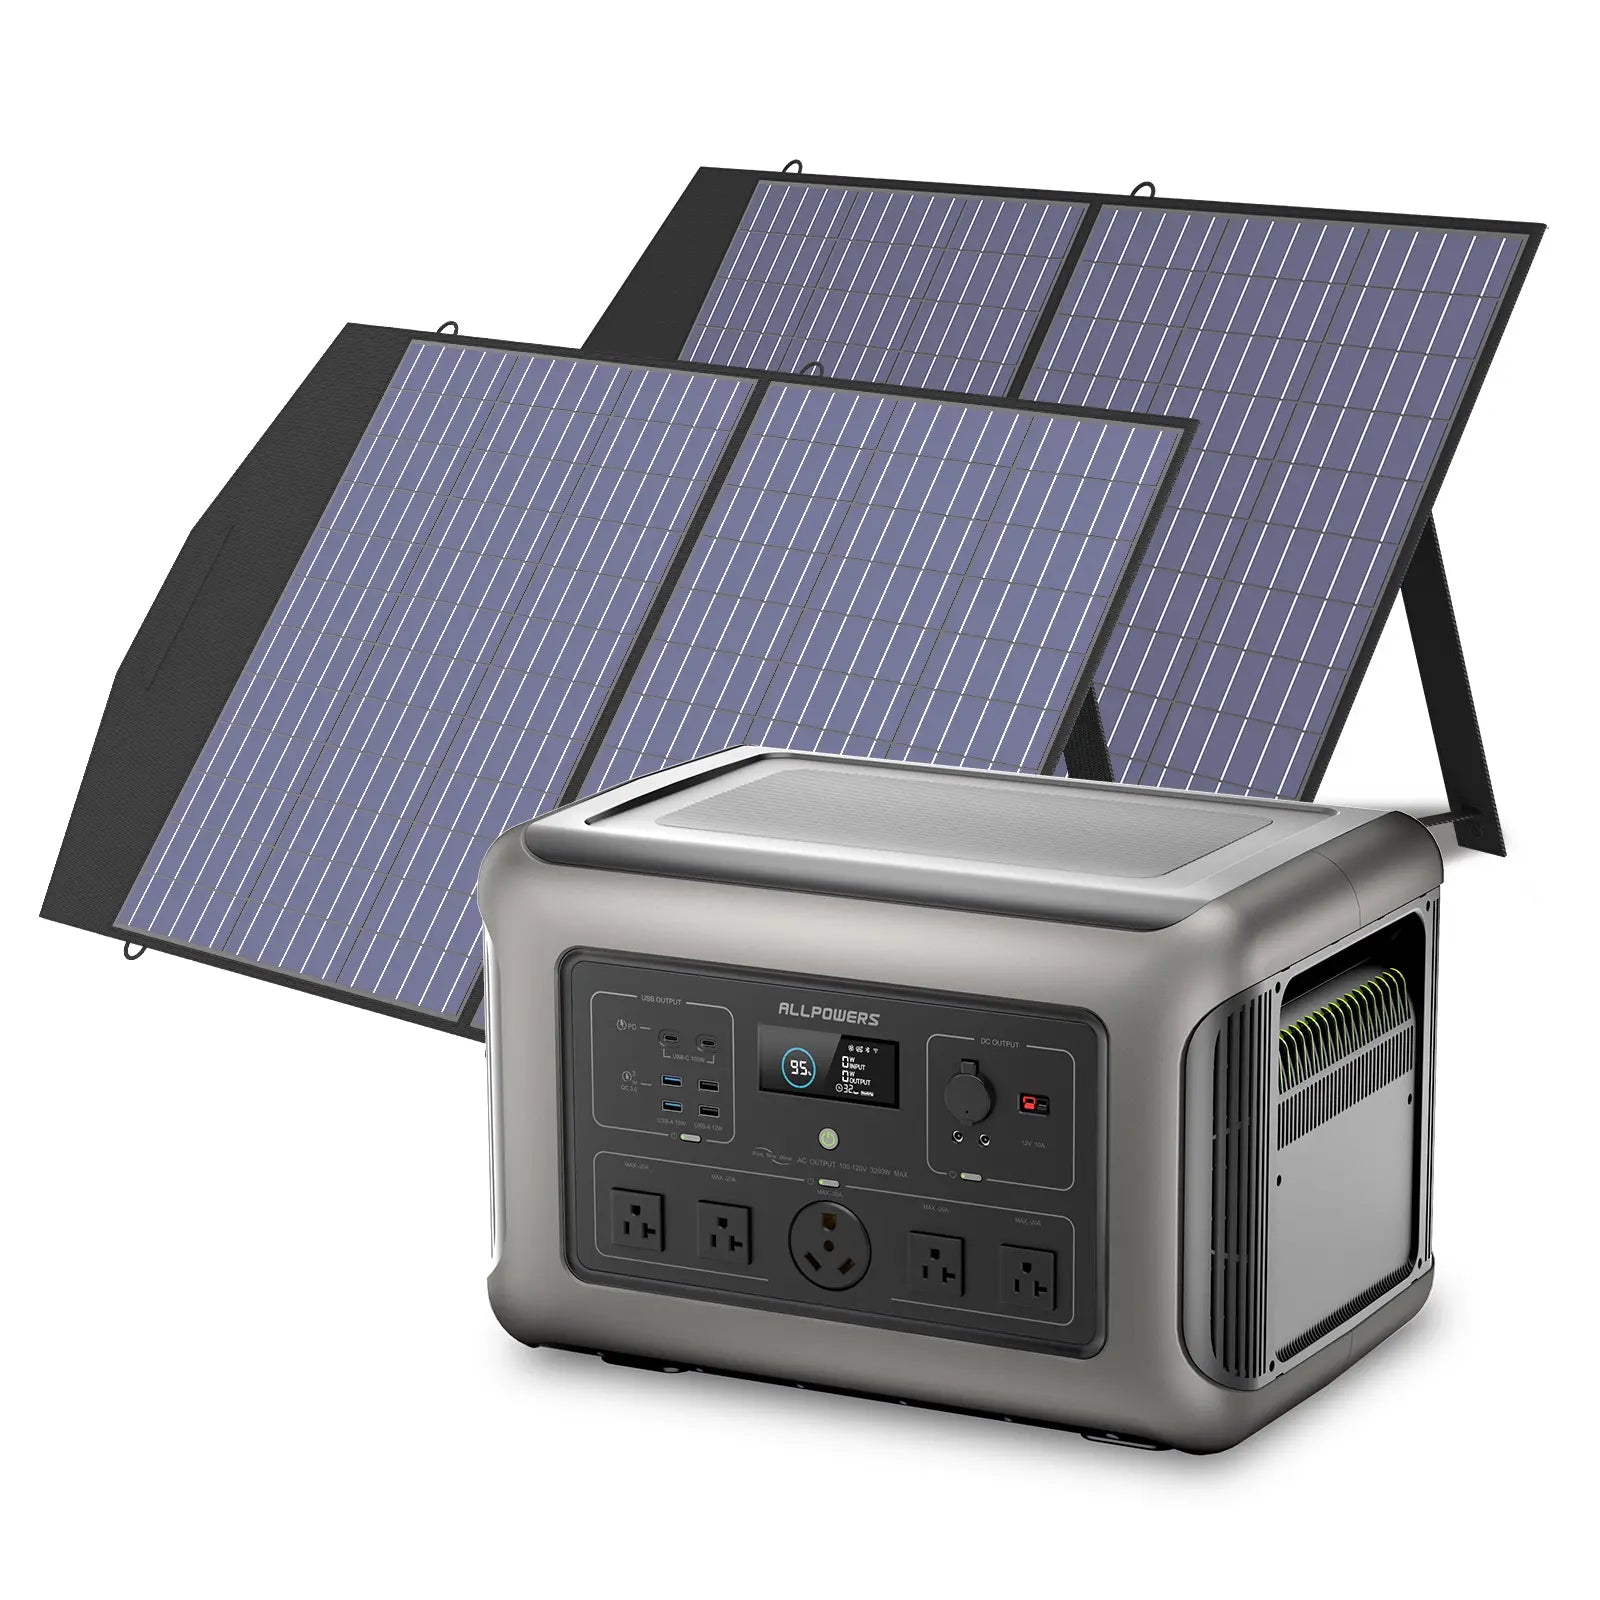 ALLPOWERS 3200W Solar Generator (R3500 + SP027 100W Solar Panel)